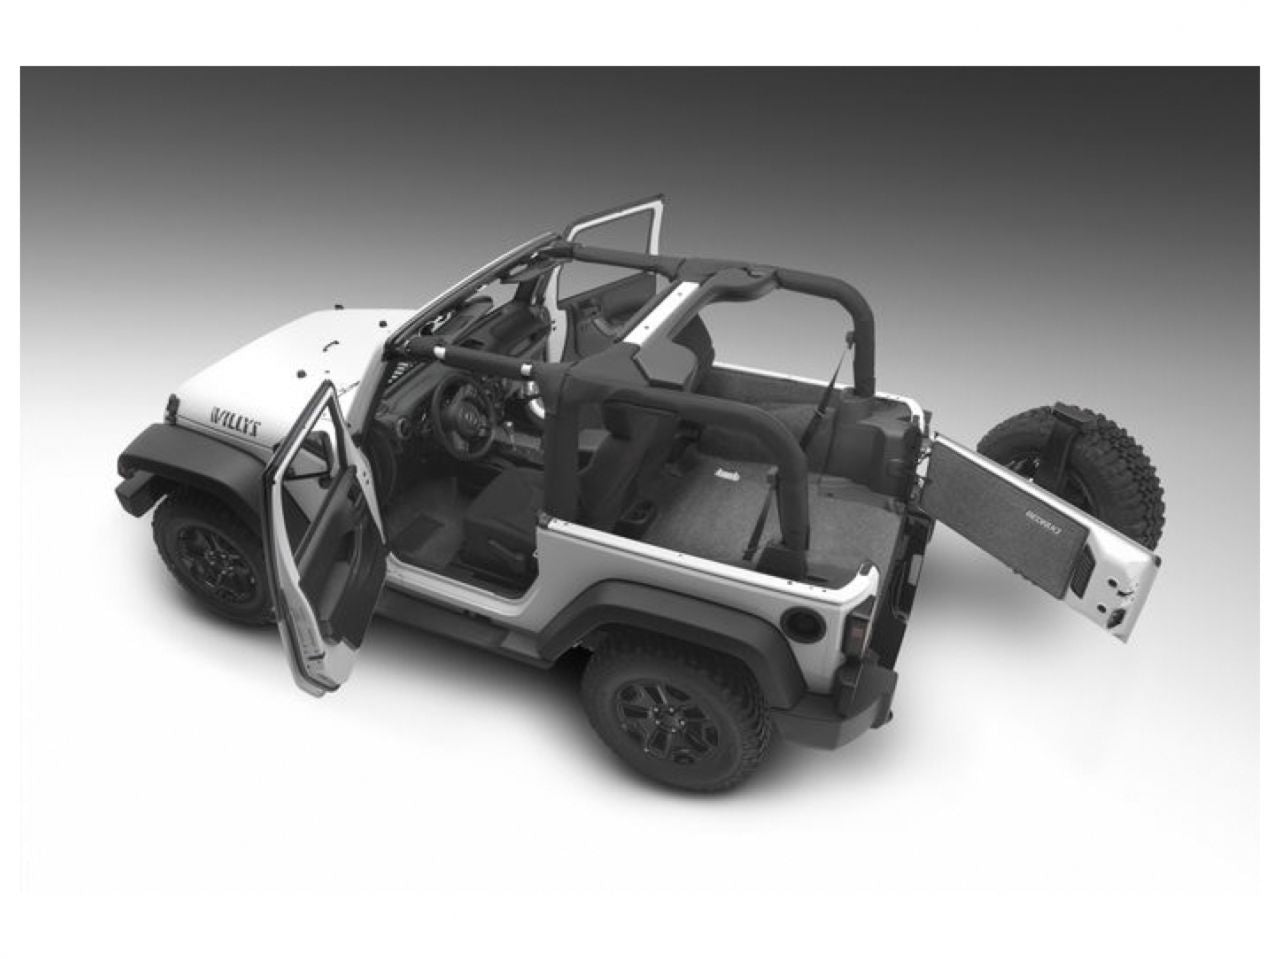 Bedrug Jeep 2Dr Rear 5PC Cargo Kit (Includes Tailgate & Tub Liner)